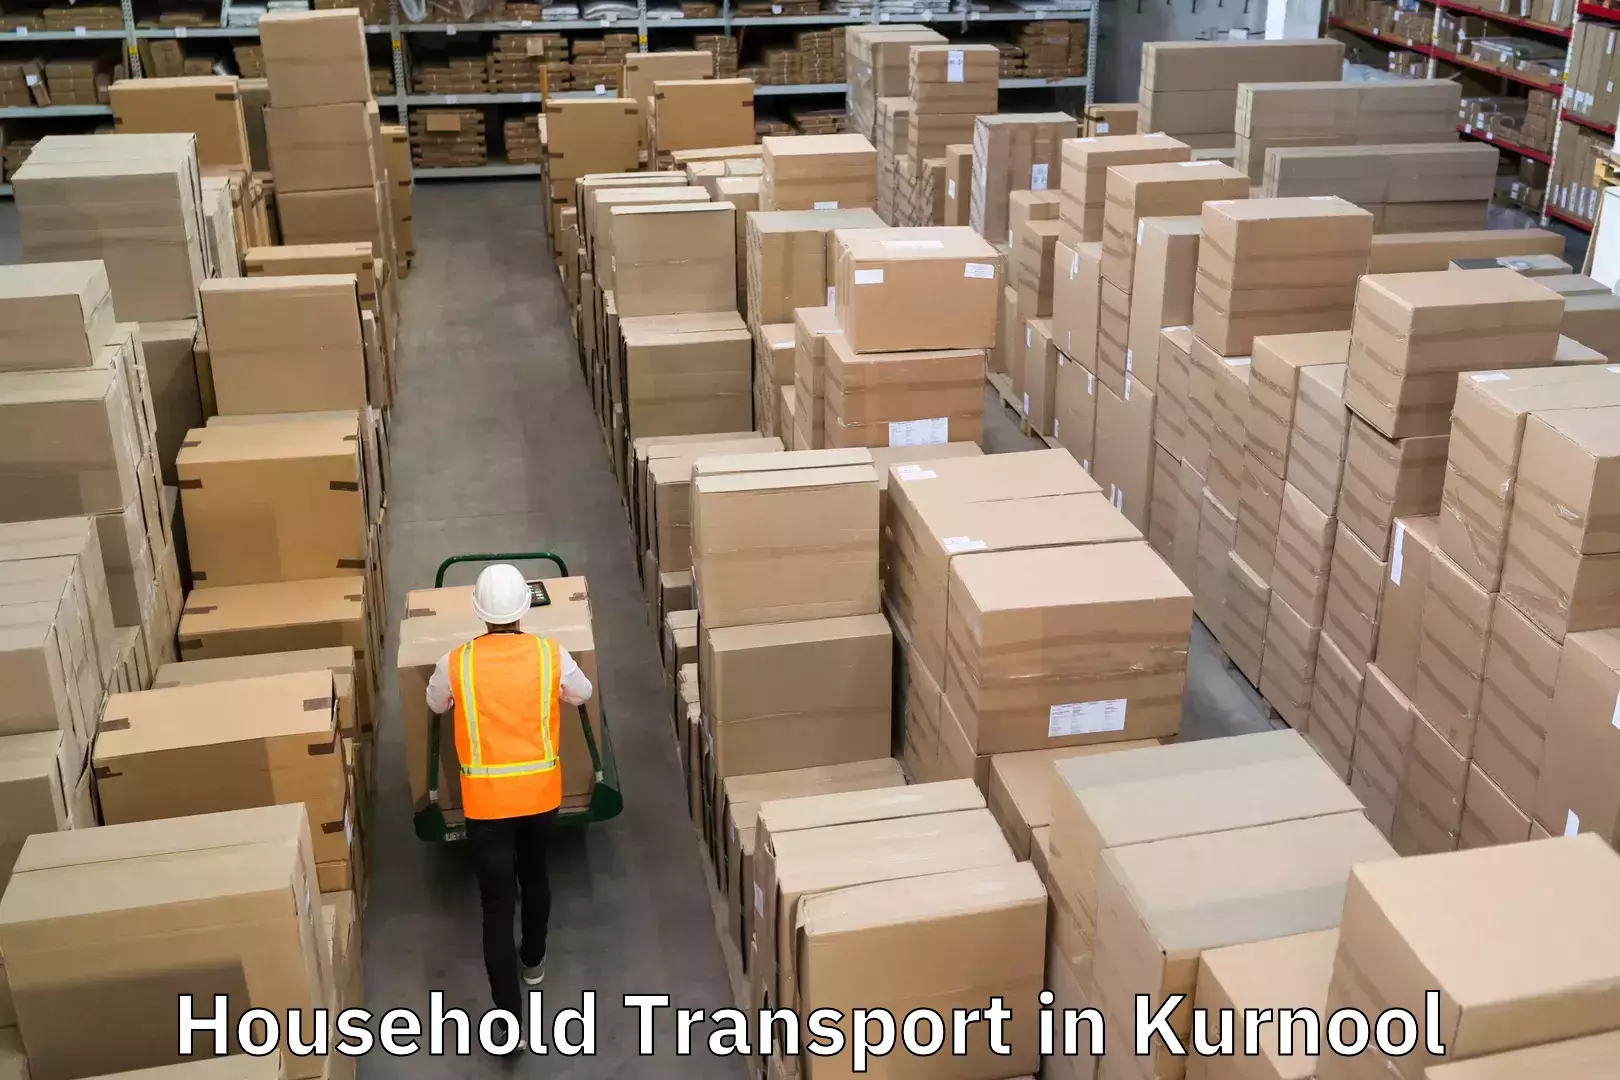 Furniture transport and storage in Kurnool